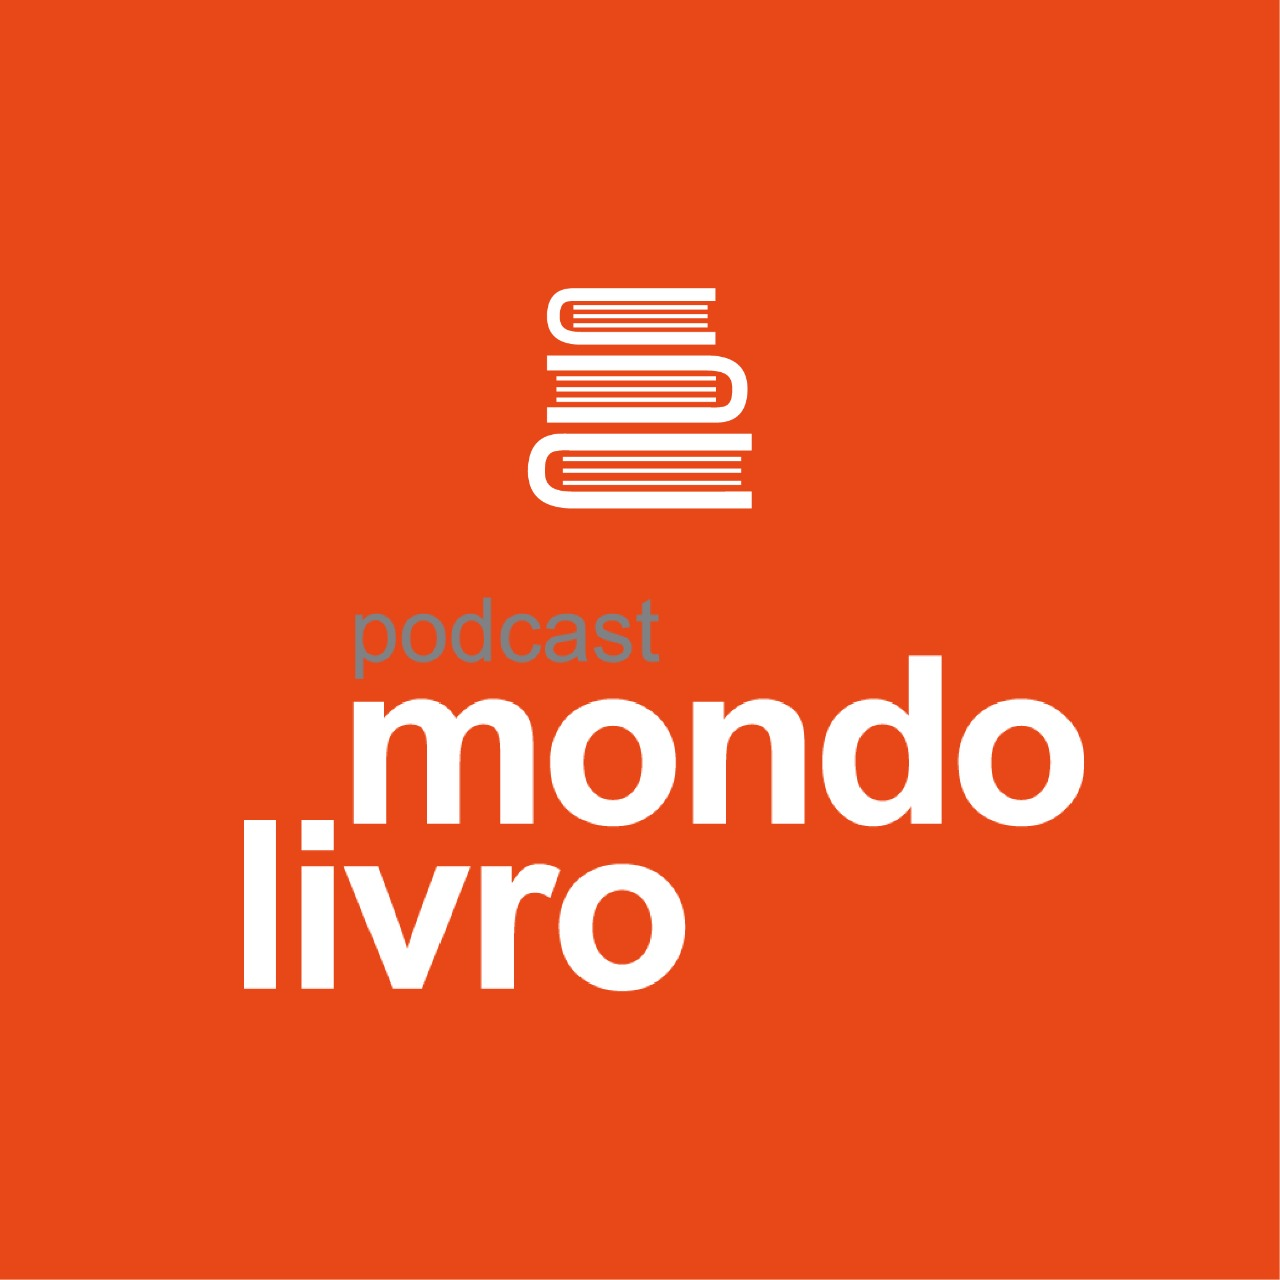 Mondolivro Podcast - Jeferson Tenório no Mondolivro Podcast